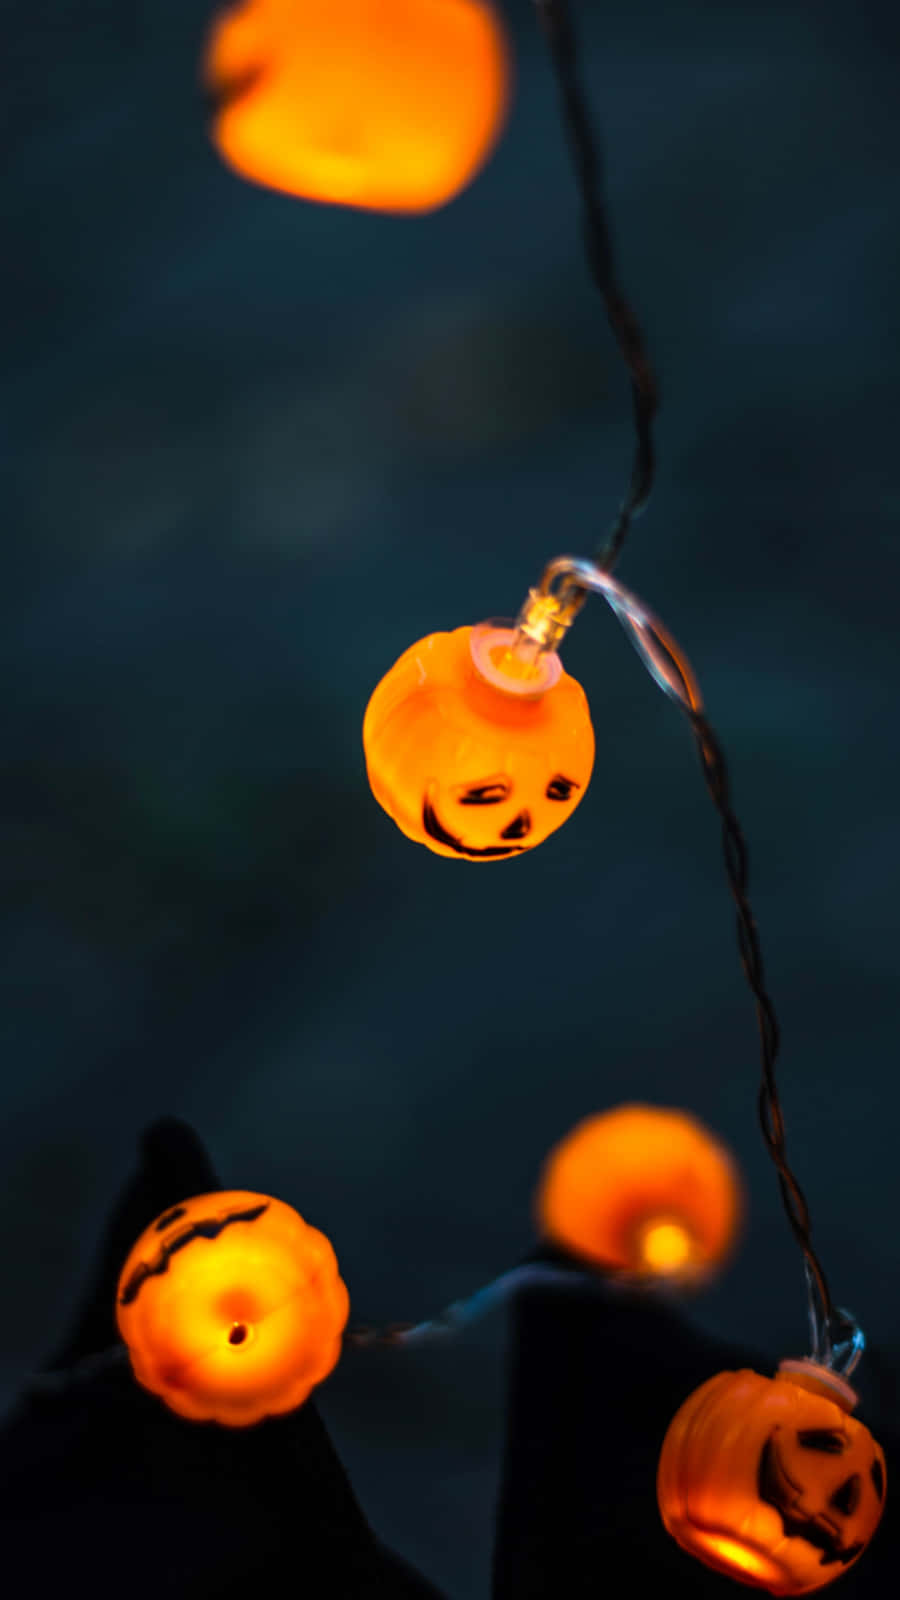 Spooky Season With A Festive Flair Wallpaper